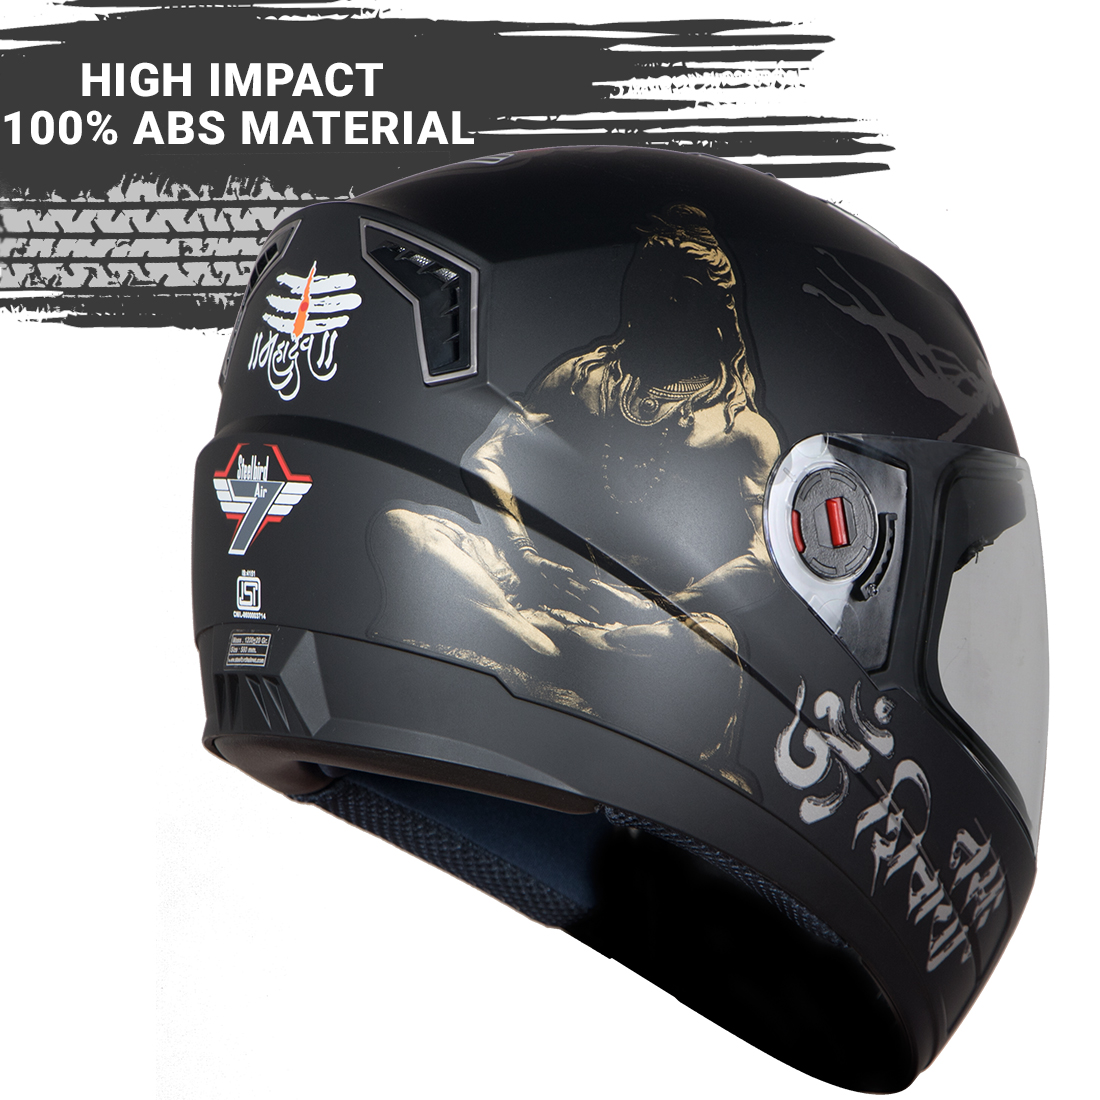 Steelbird SBA-1 Mahadev Full Face ISI Certified Graphic Helmet (Matt Black Gold With Clear Visor)